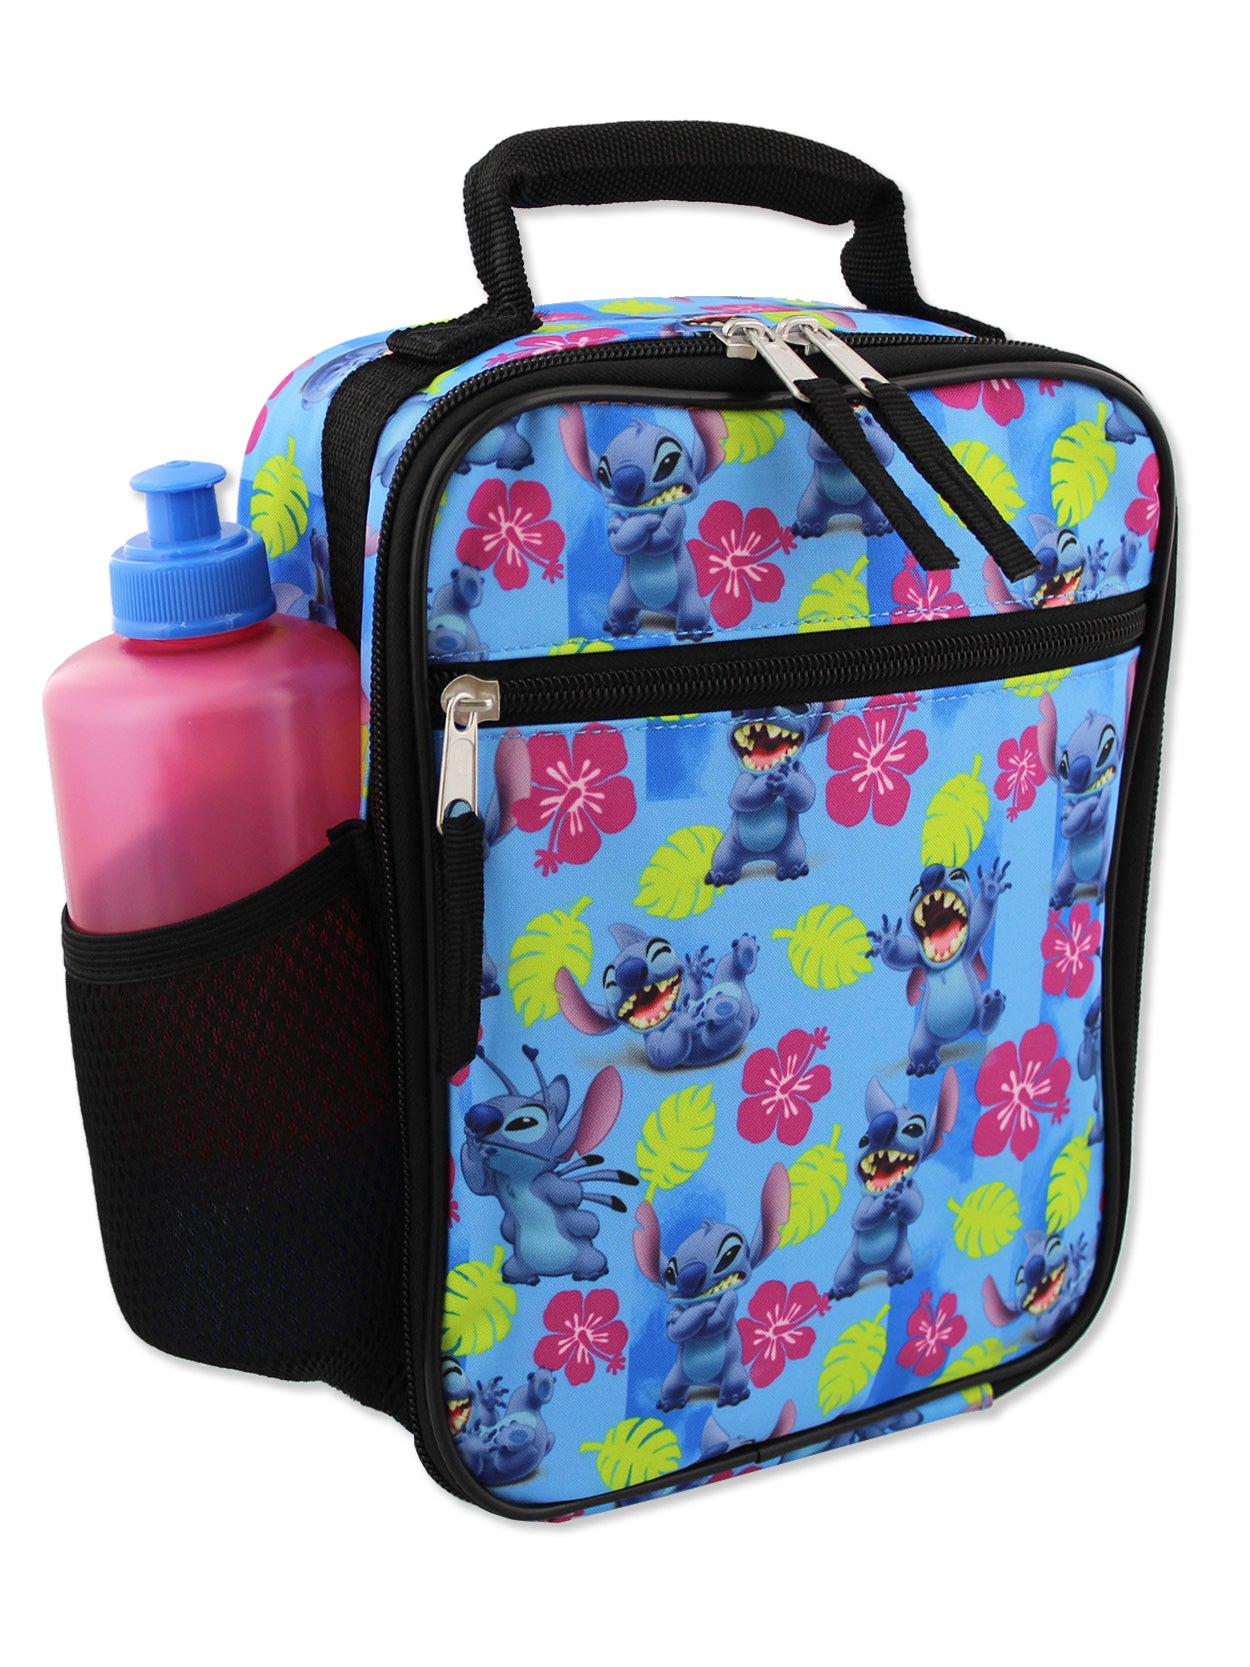 Disney Stitch insulated lunch bag lunchbox